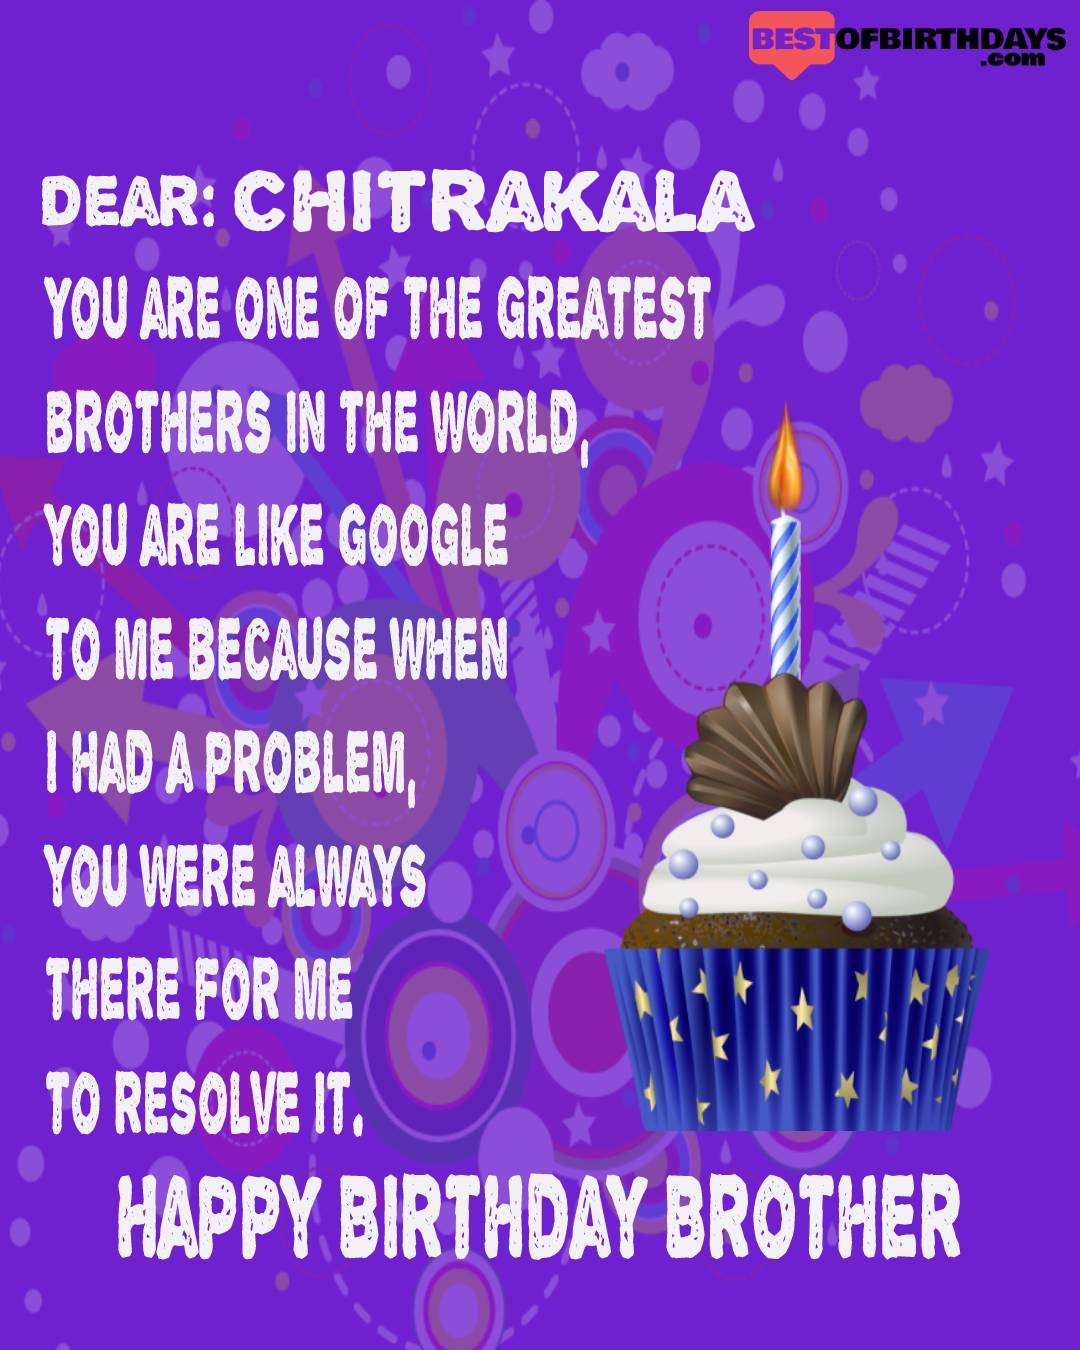 Happy birthday chitrakala bhai brother bro